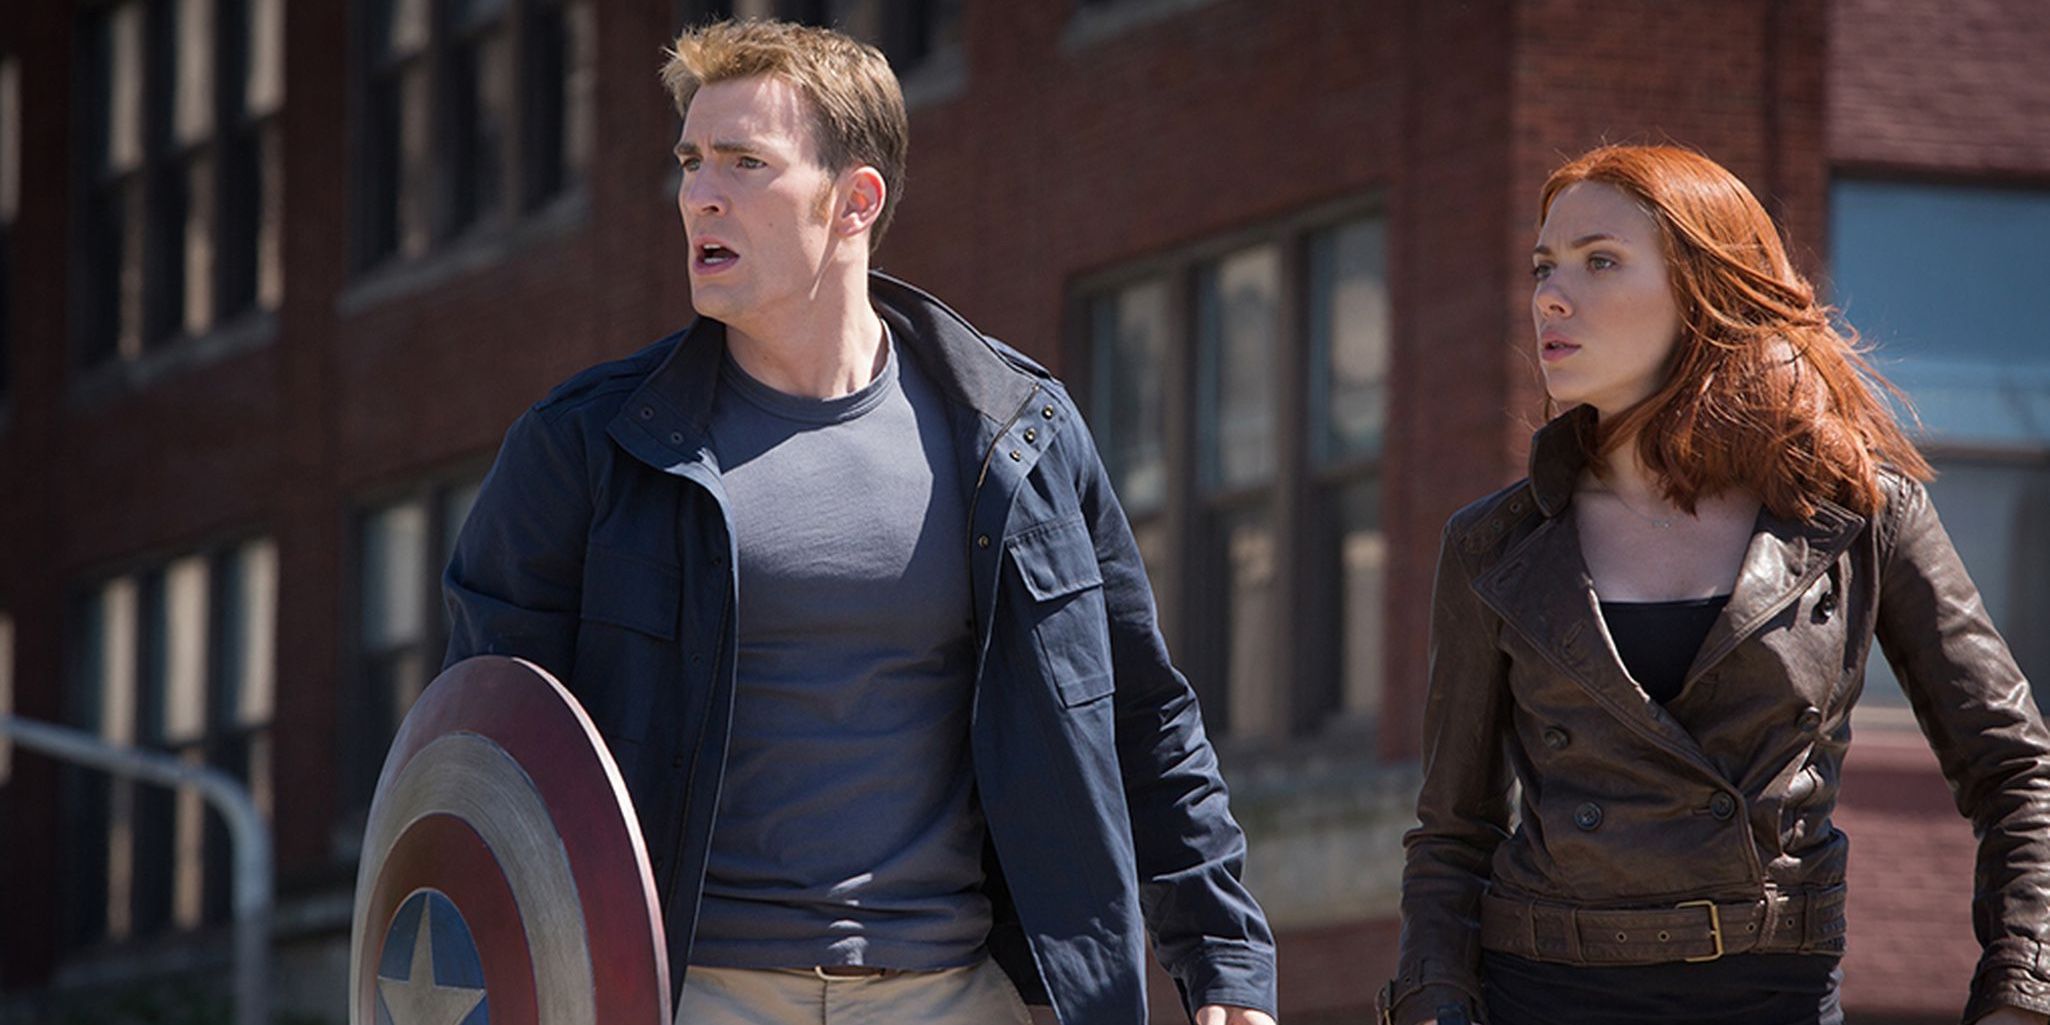 Chris Evans as Captain America and Scarlett Johansson as Black Widow.